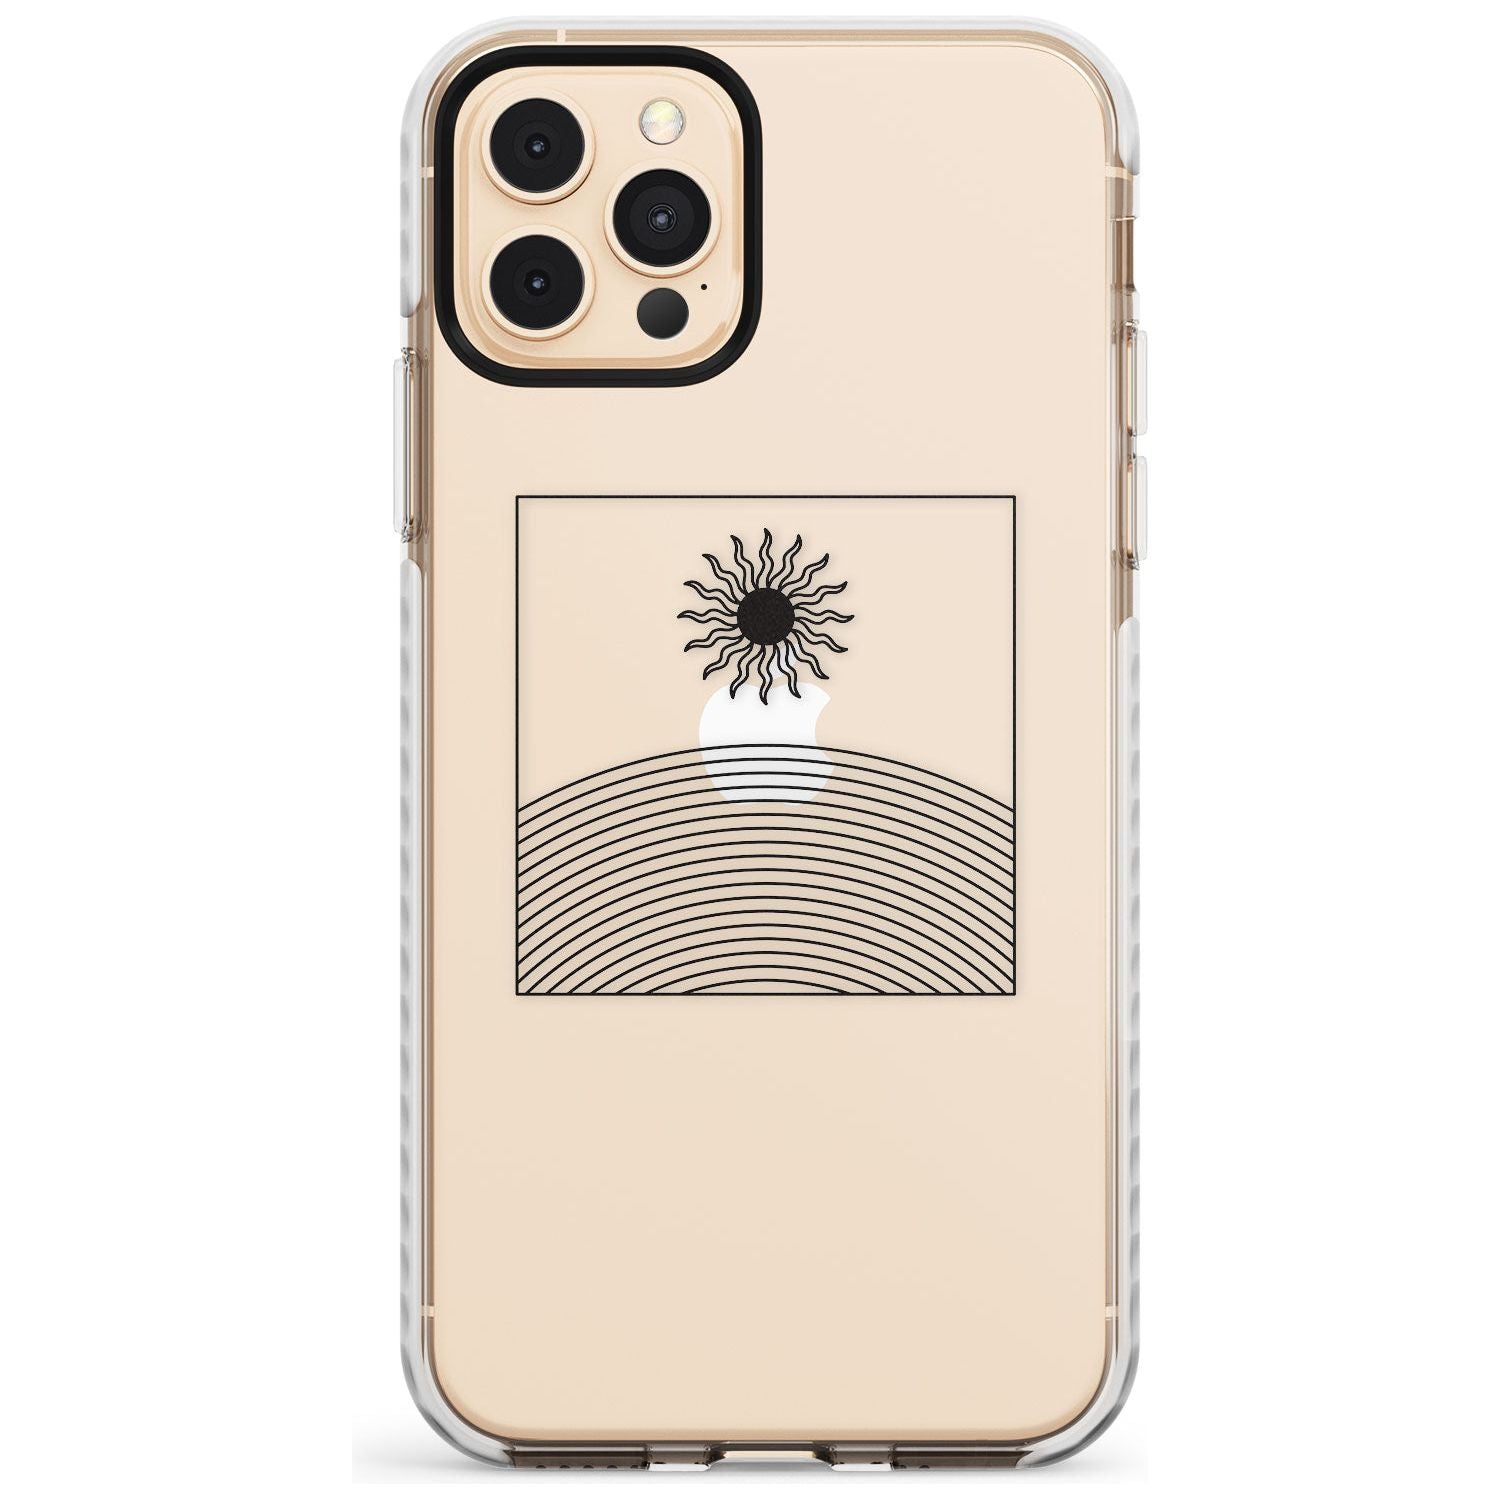 Framed Linework: Rising Sun Slim TPU Phone Case for iPhone 11 Pro Max